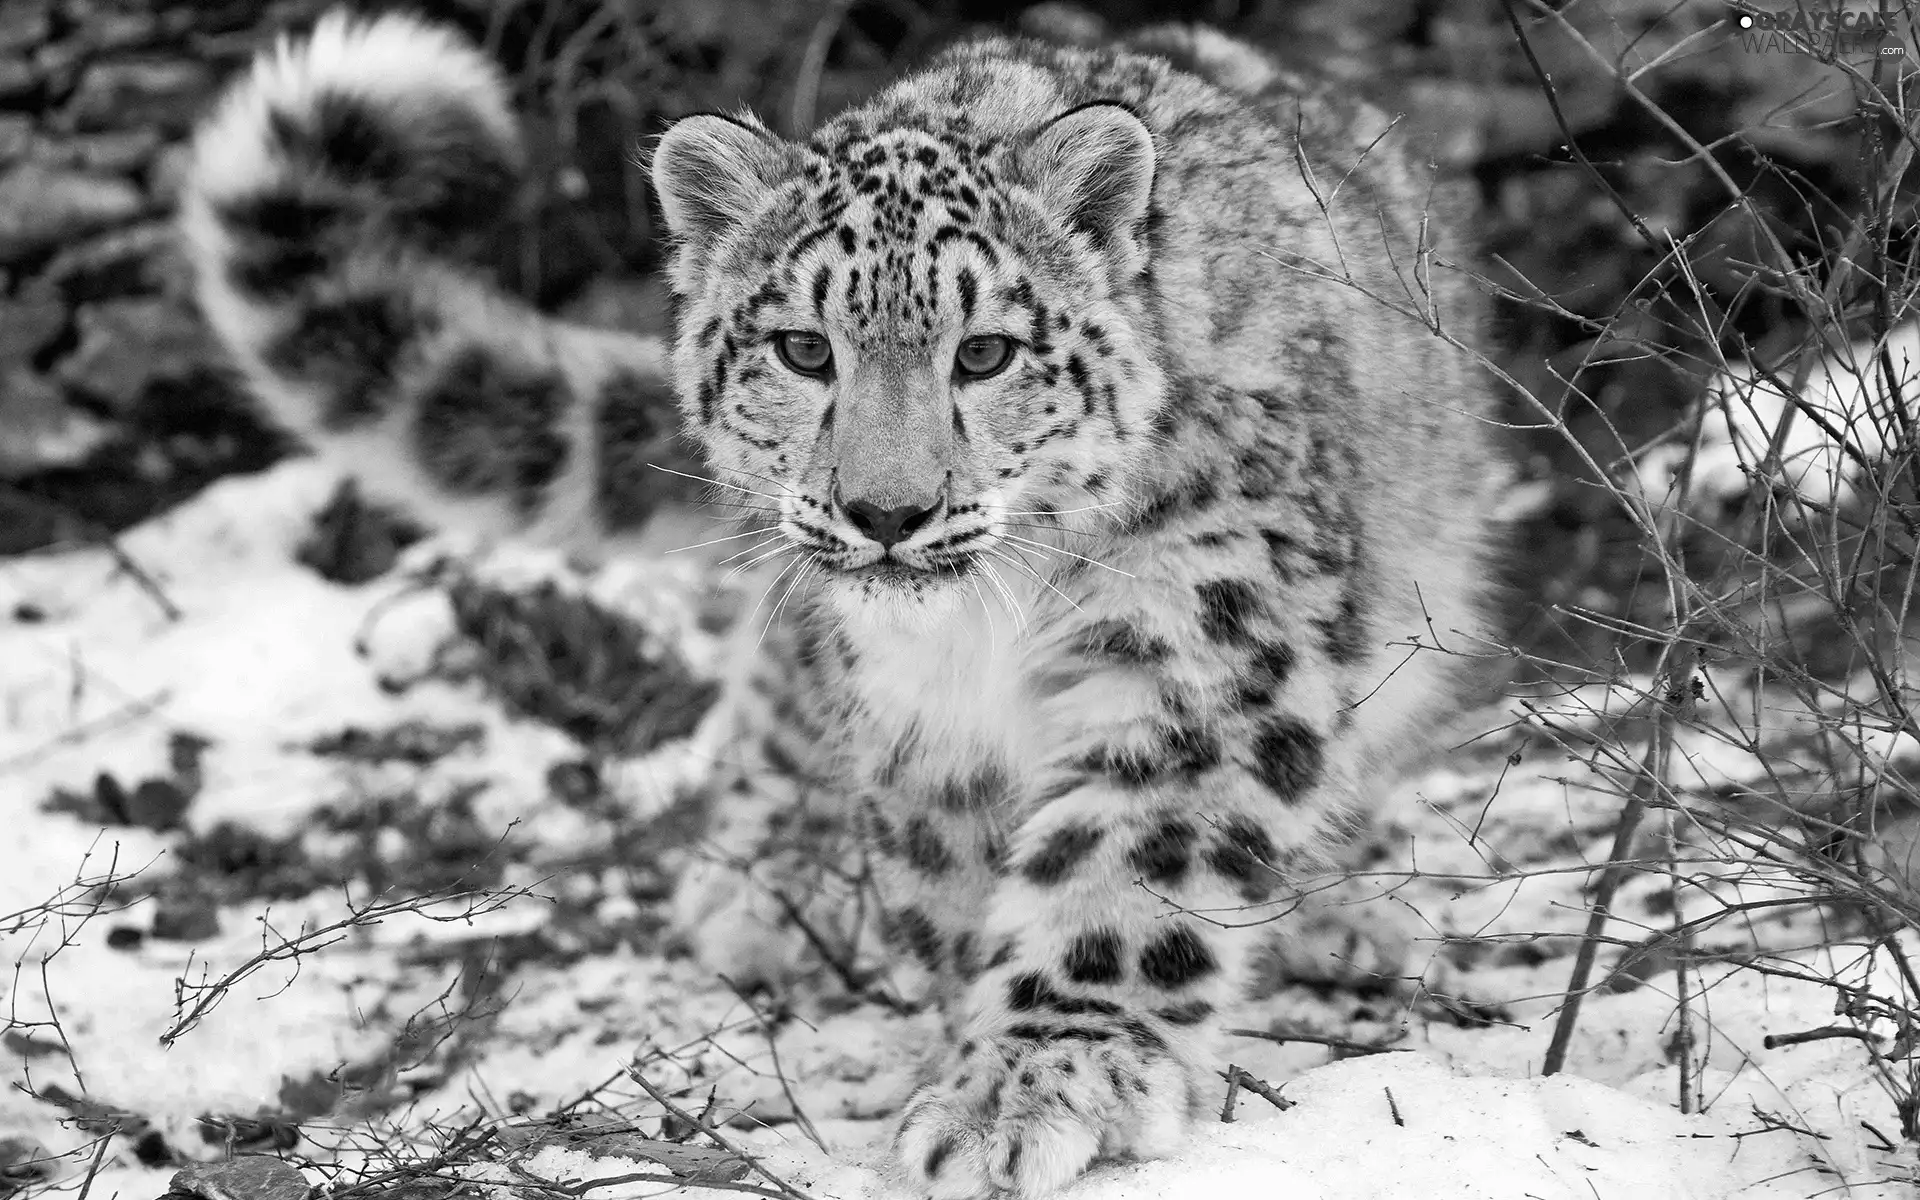 snow leopard, Black, White, winter